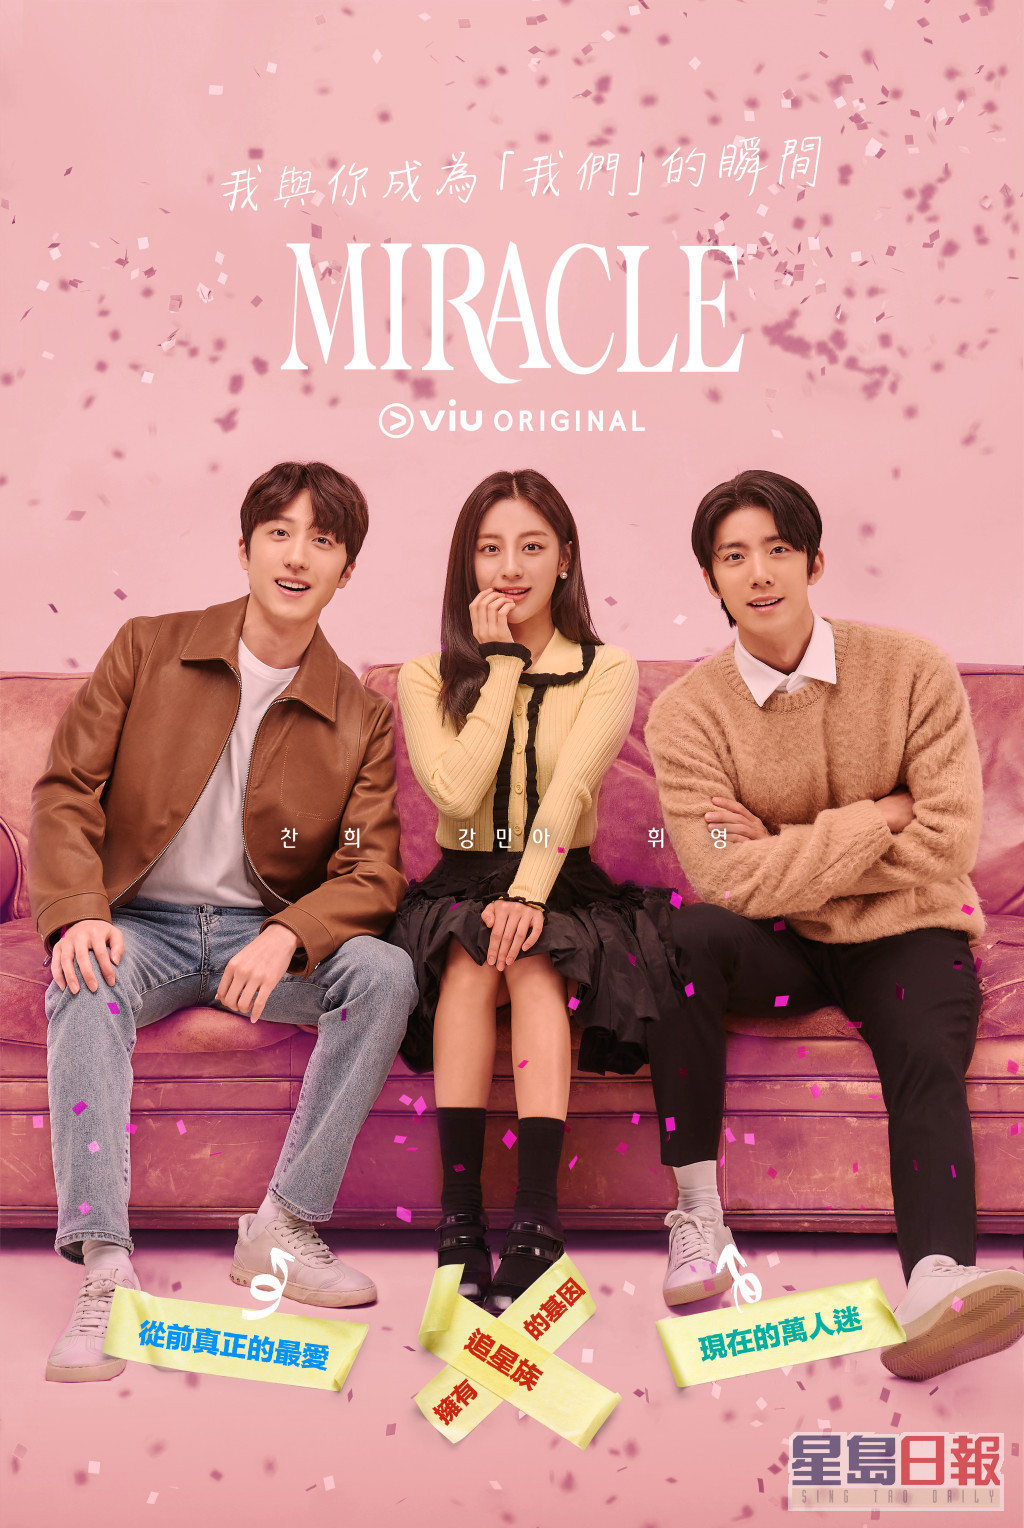 《Miracle》集合了三位青春演員澯熙、姜旻兒及輝映合作。